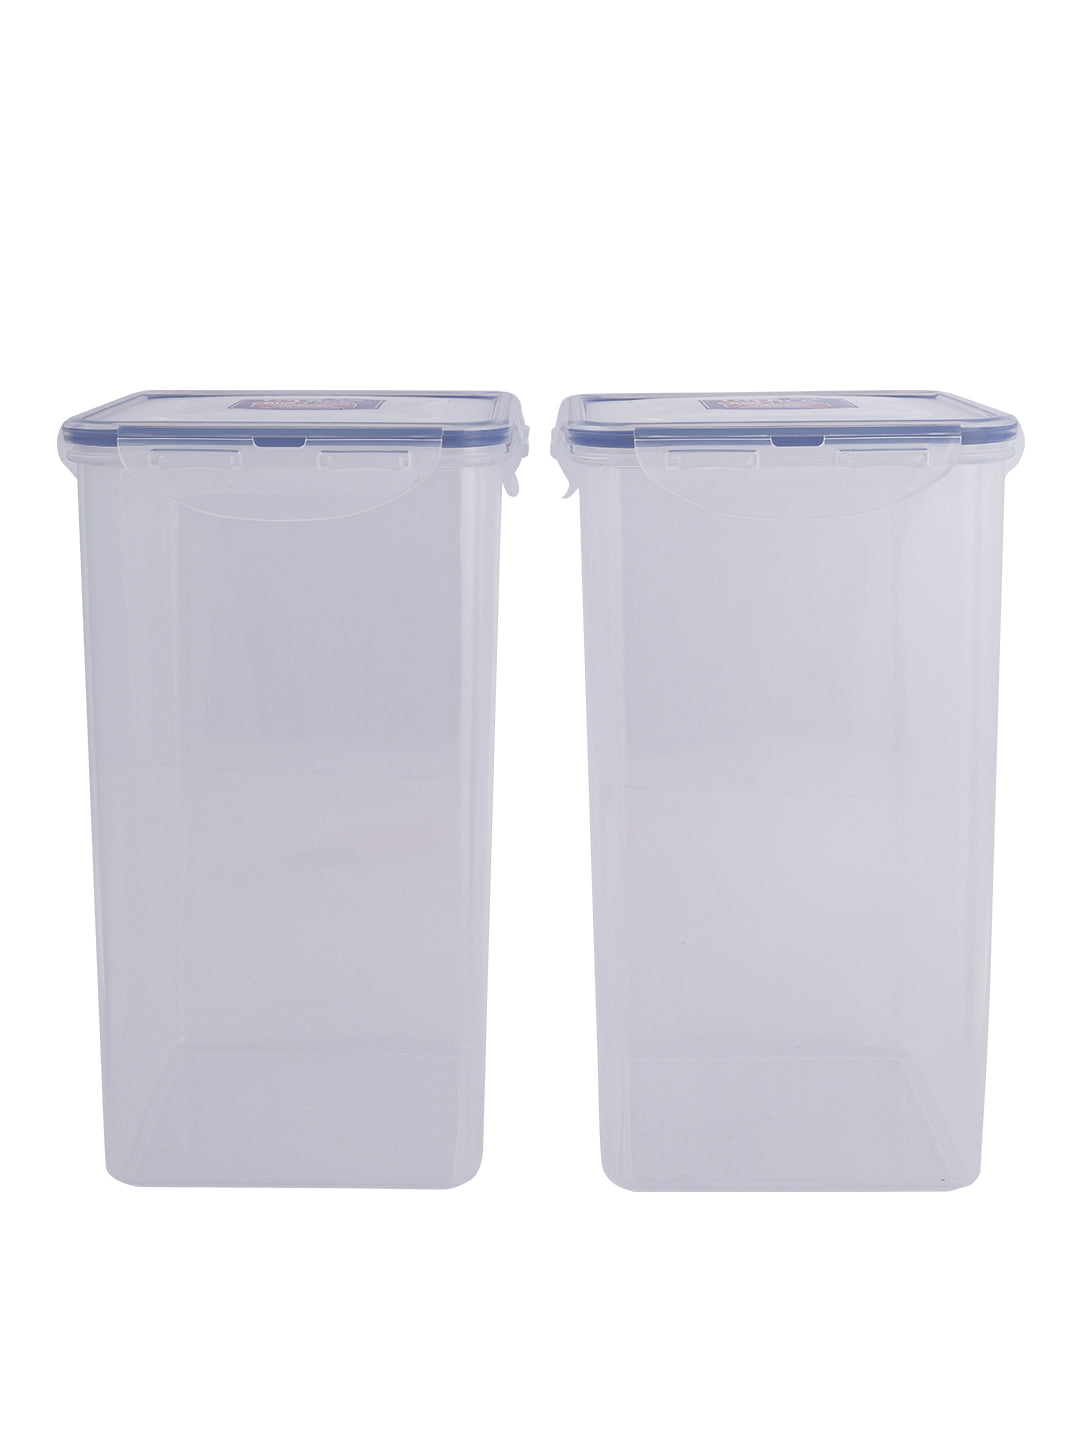 LocknLock Classics Square Plastic Airtight Food Storage Container, 4 Liter, Set of 2